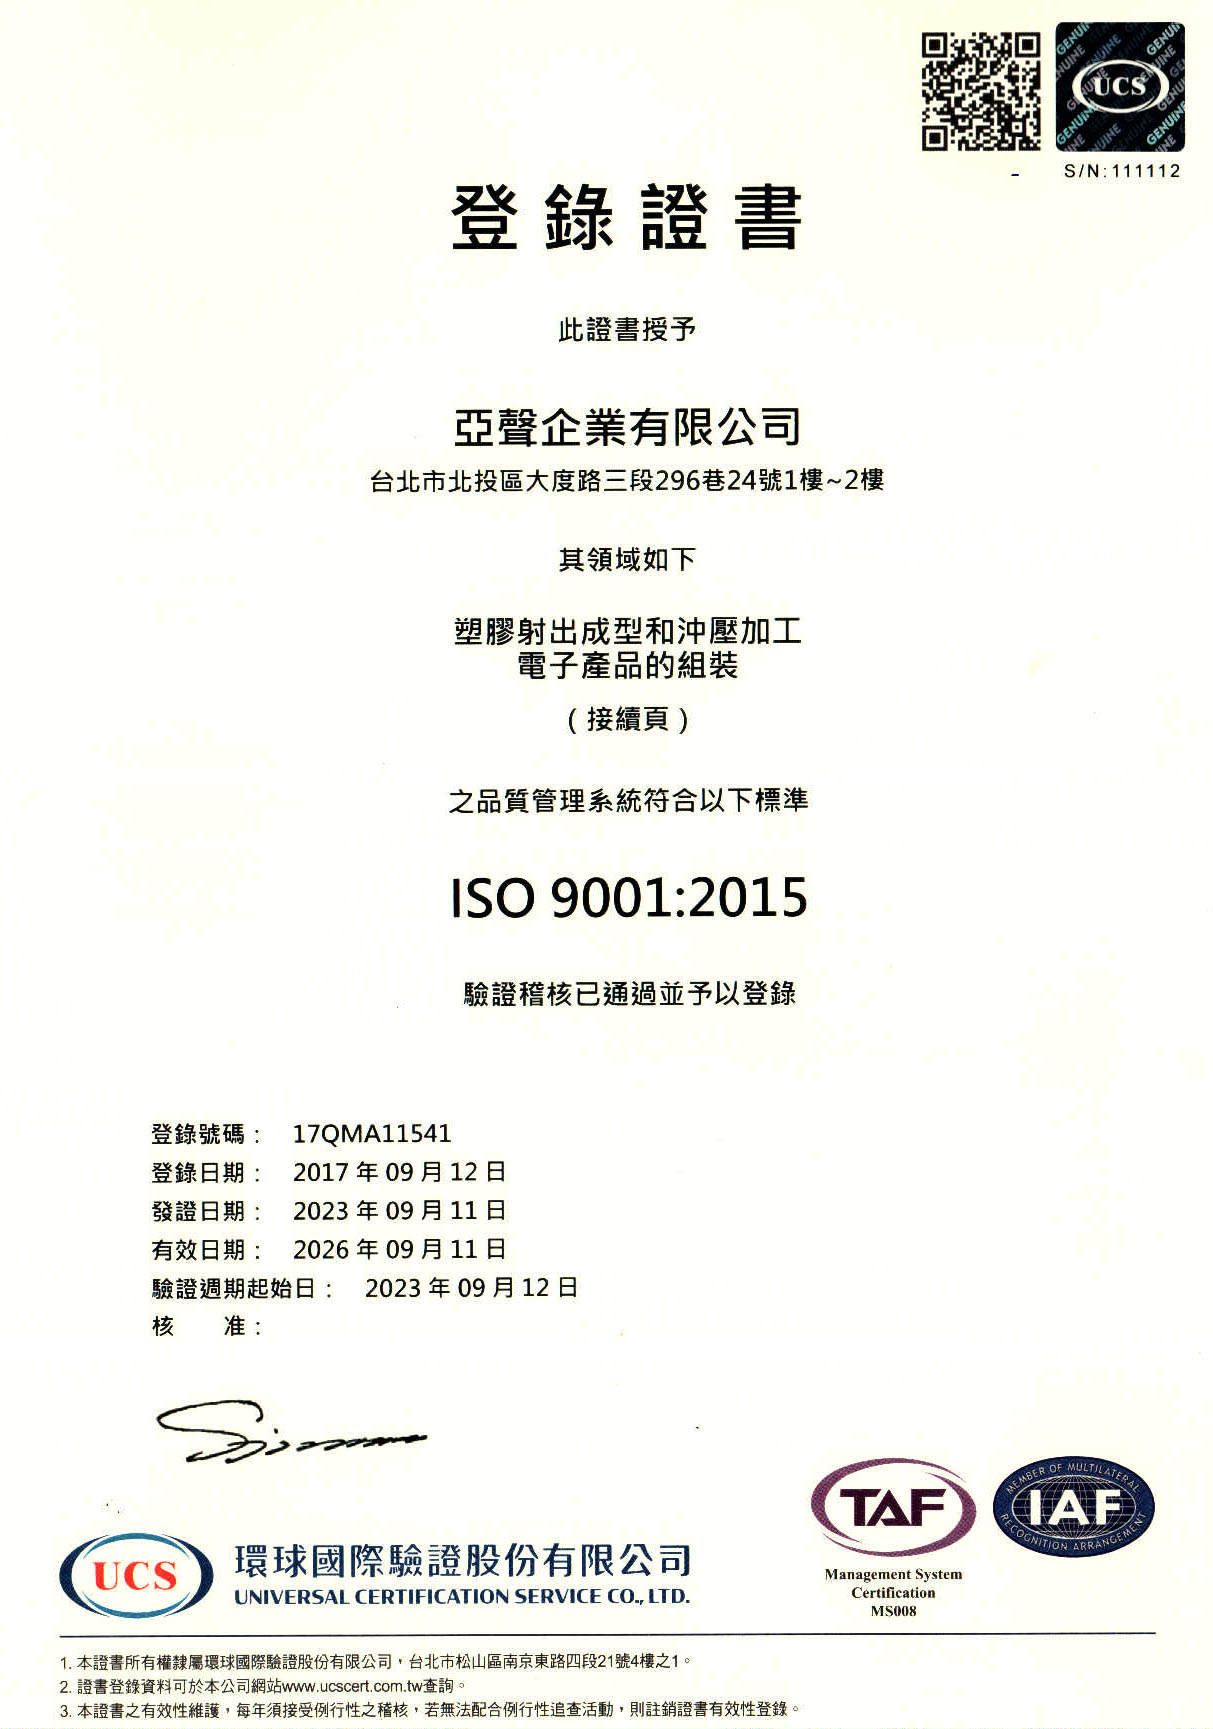 亞聲ISO 9001 中文證書首頁